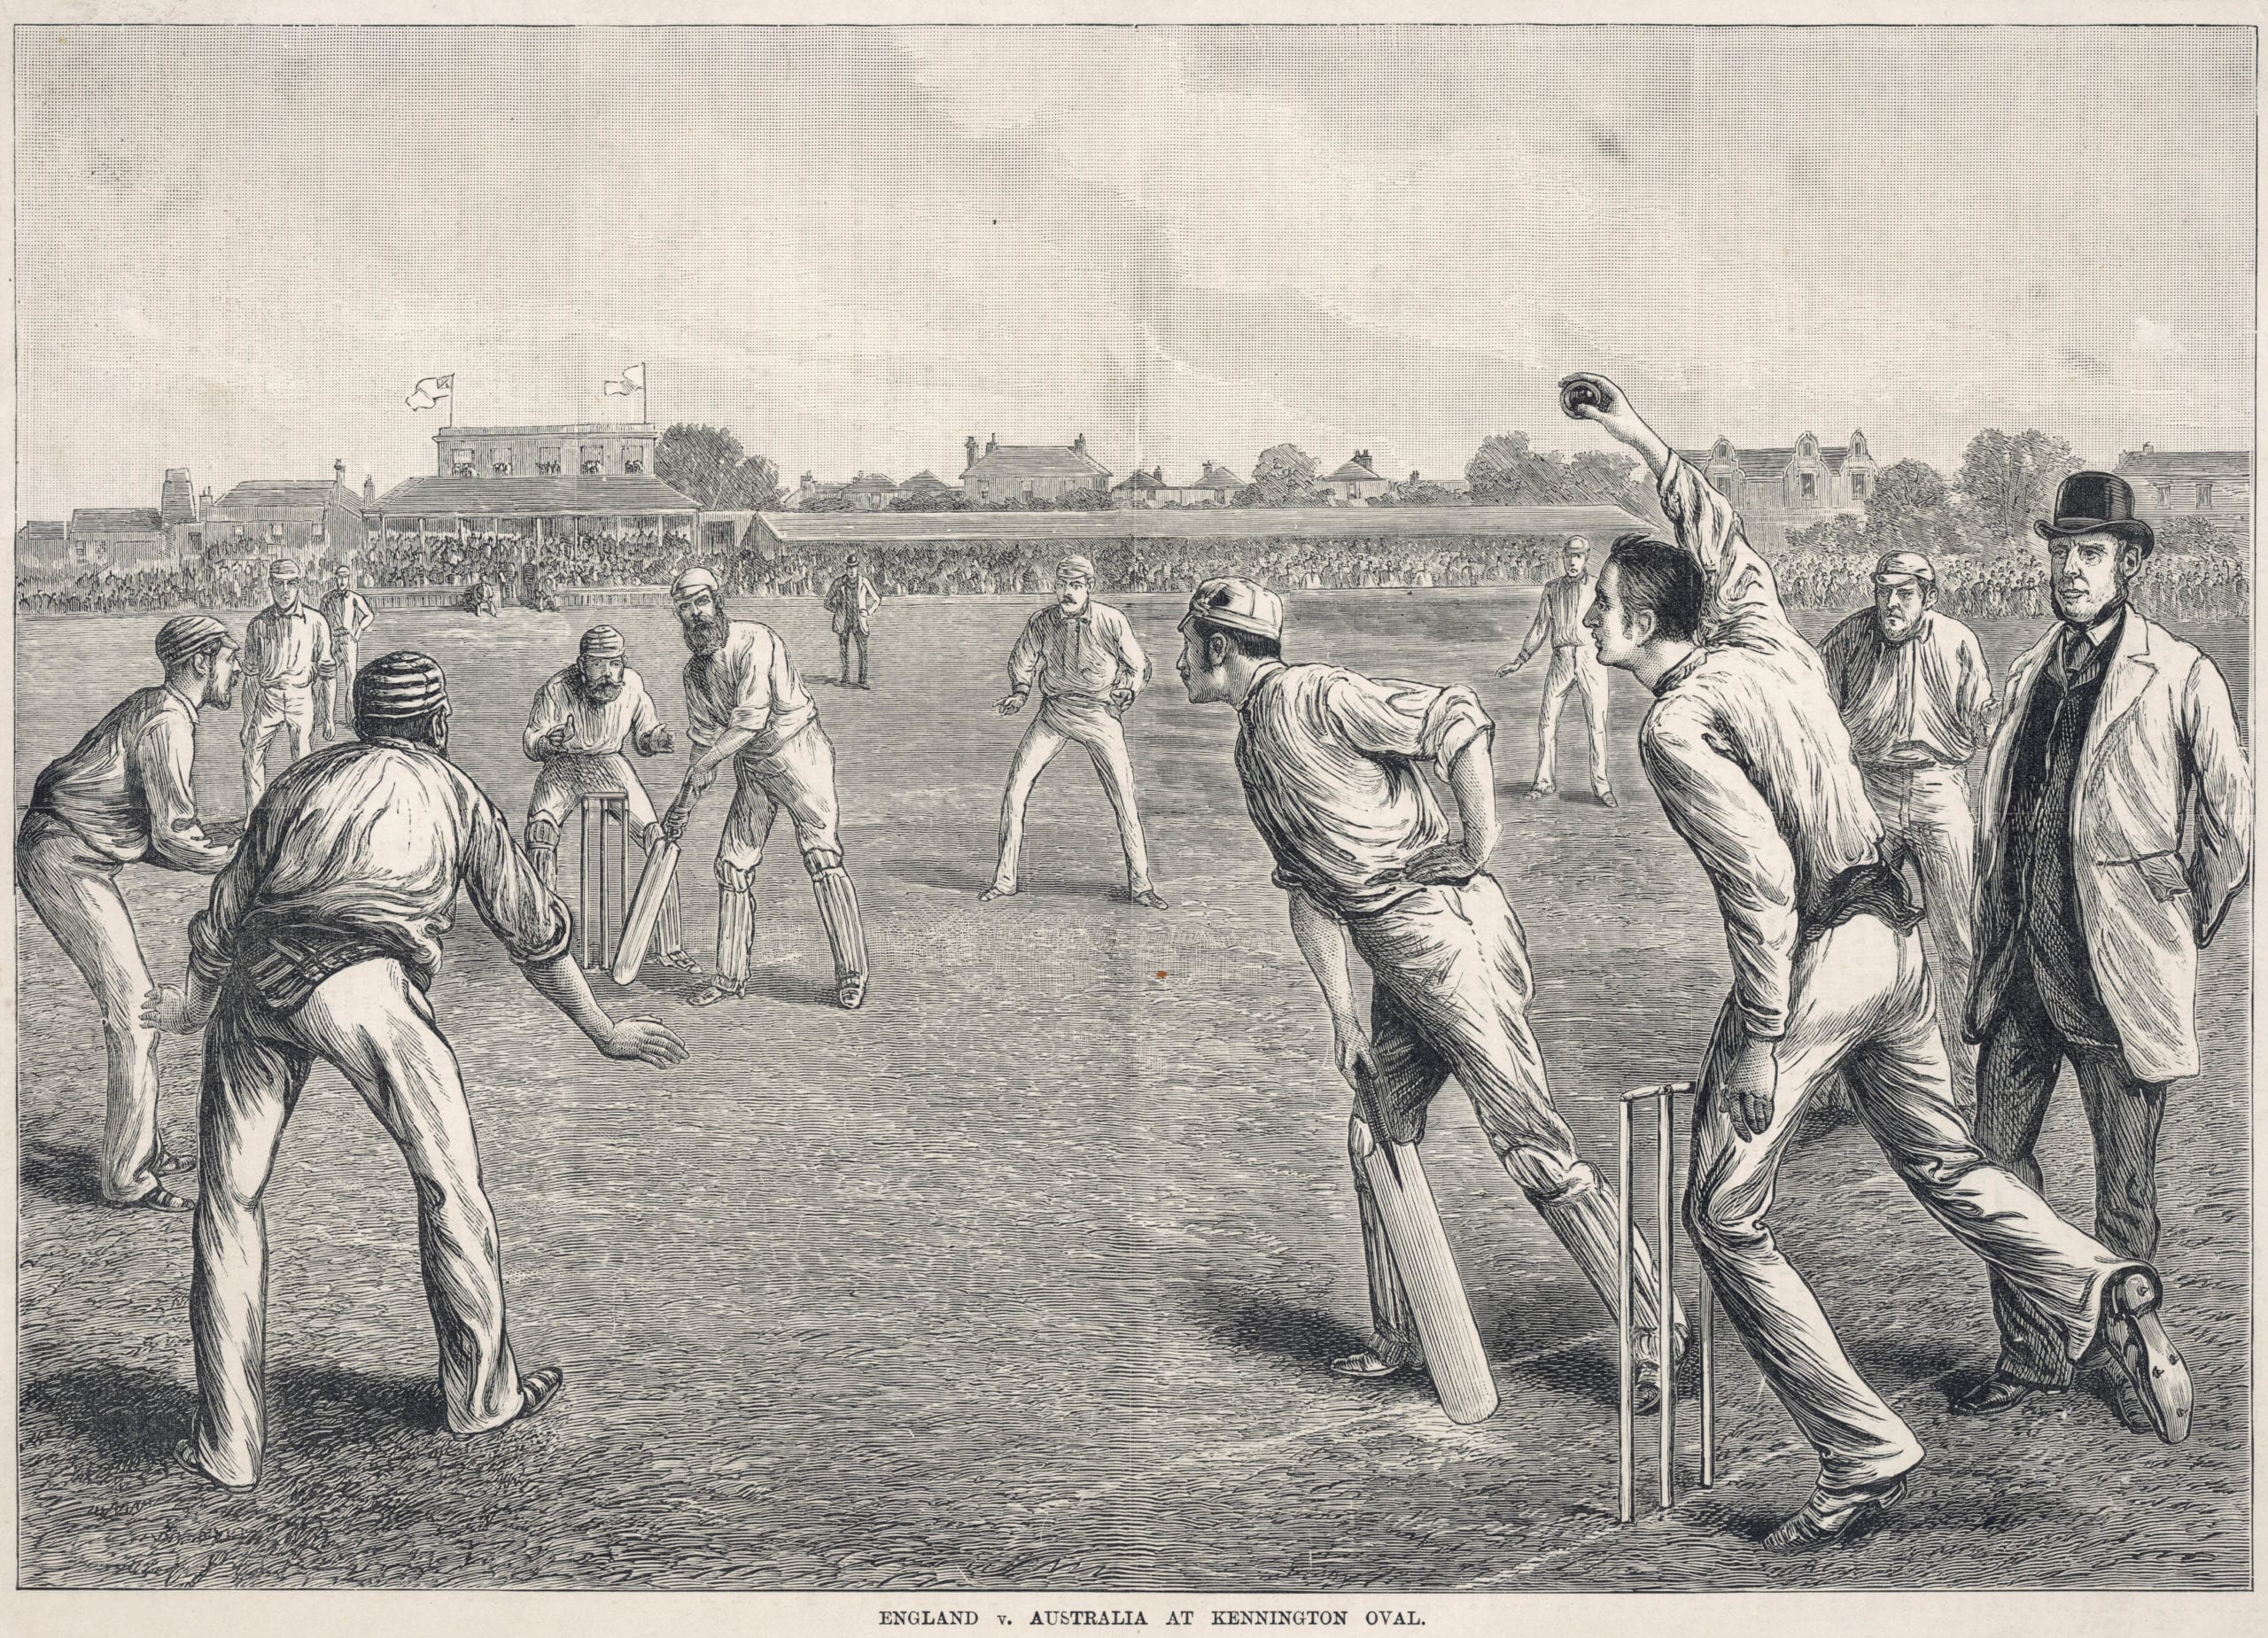 England V Australia cricket match. Date: late 19th century